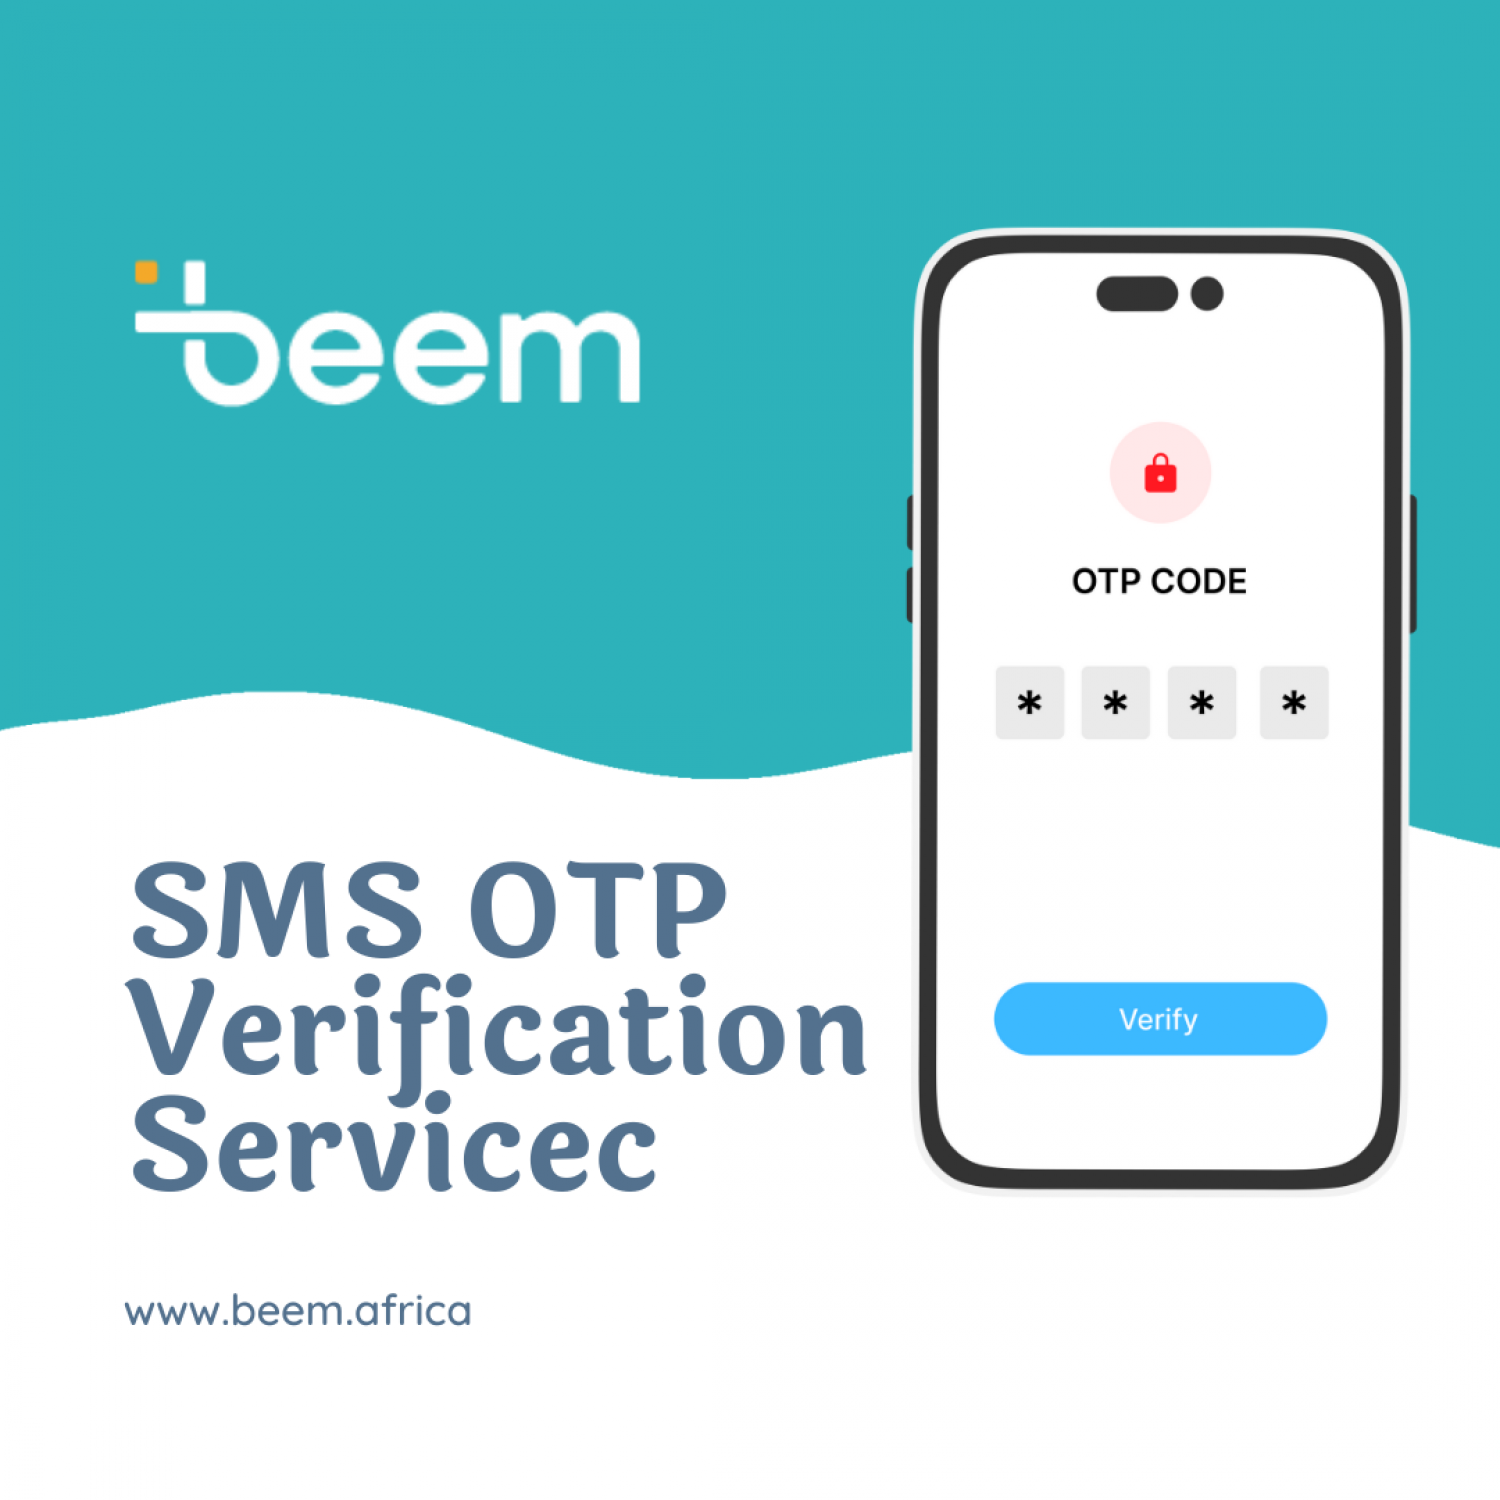 SMS OTP Verification Service Provider - Beem Infographic